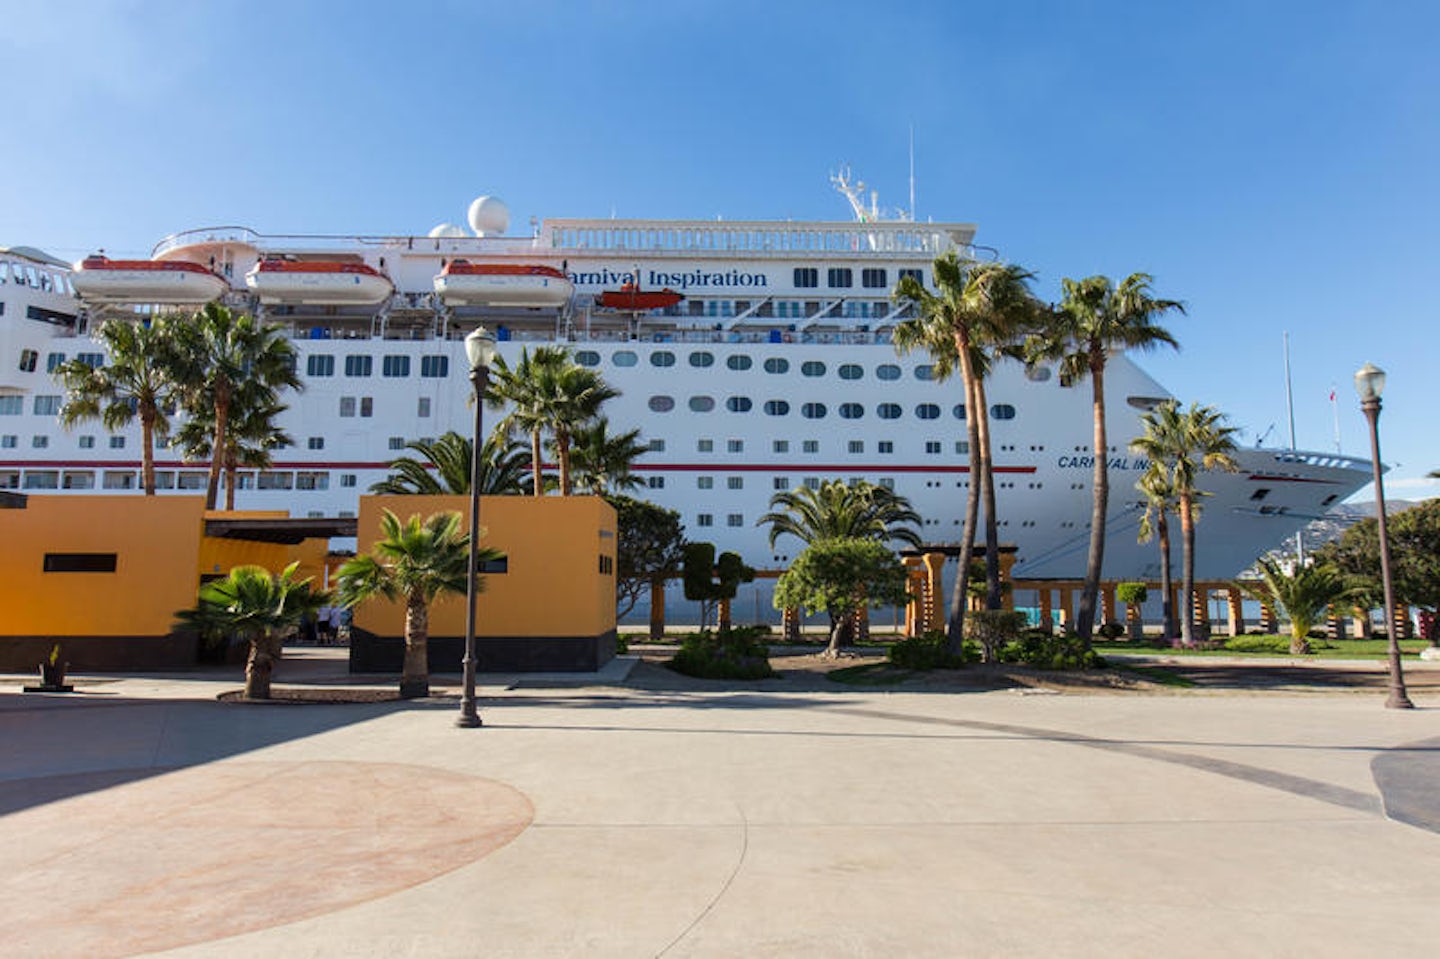 ensenada cruise port restaurants